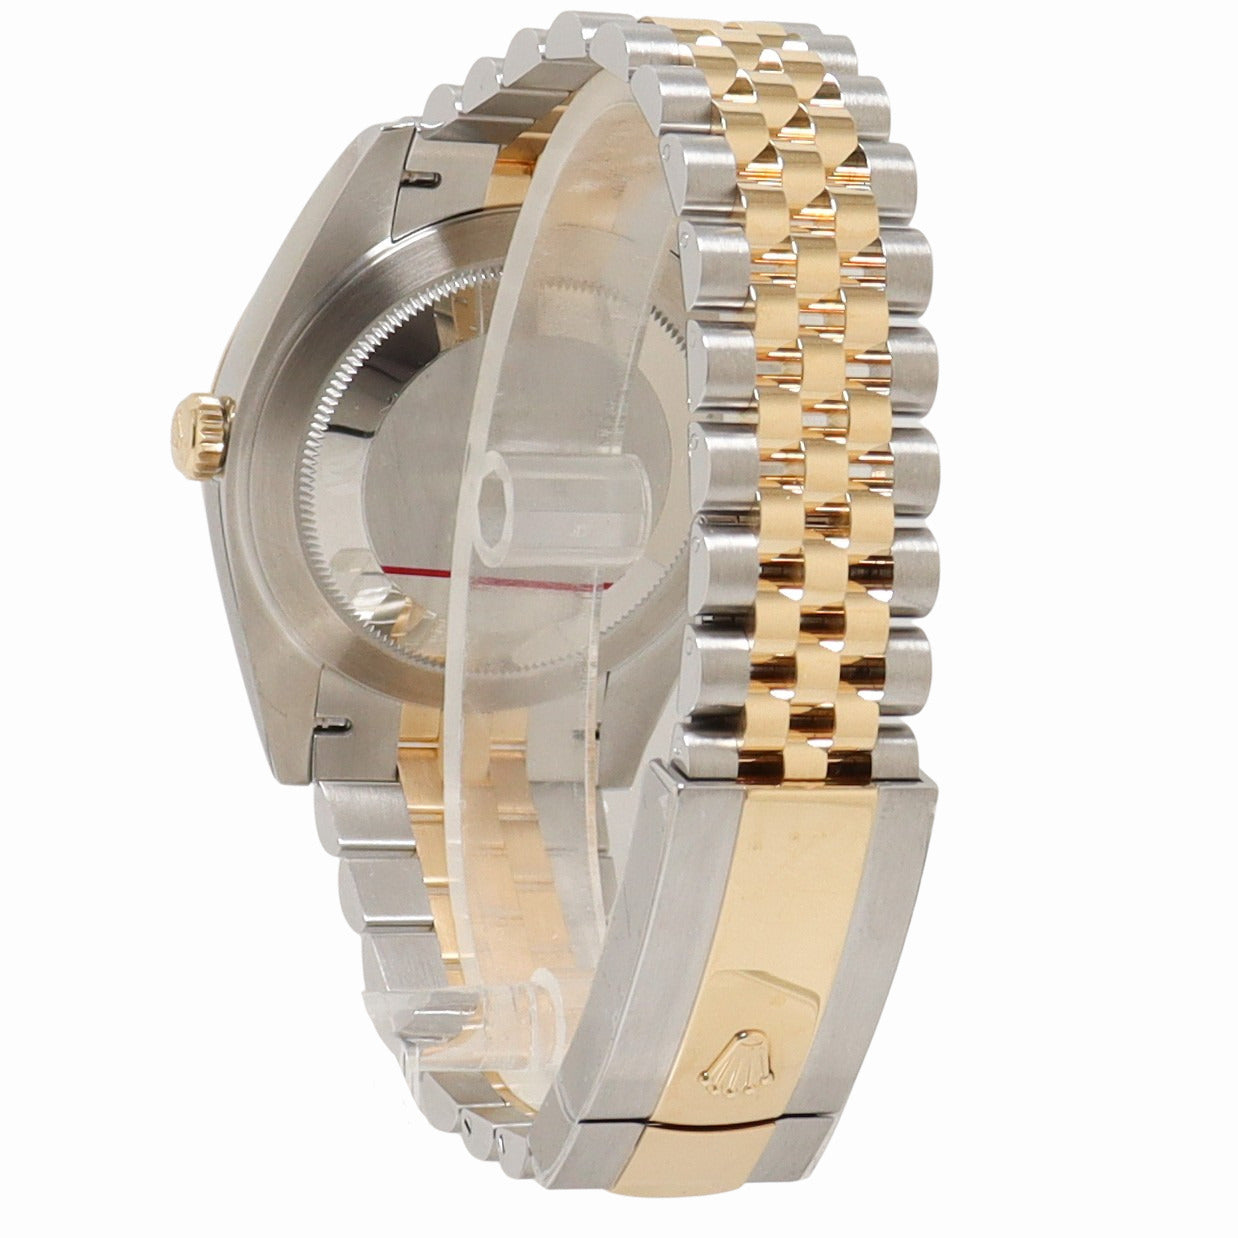 Rolex Datejust Two Tone Yellow Gold & Steel 41mm White MOP Diamond Dial Watch Reference #: 126333 - Happy Jewelers Fine Jewelry Lifetime Warranty